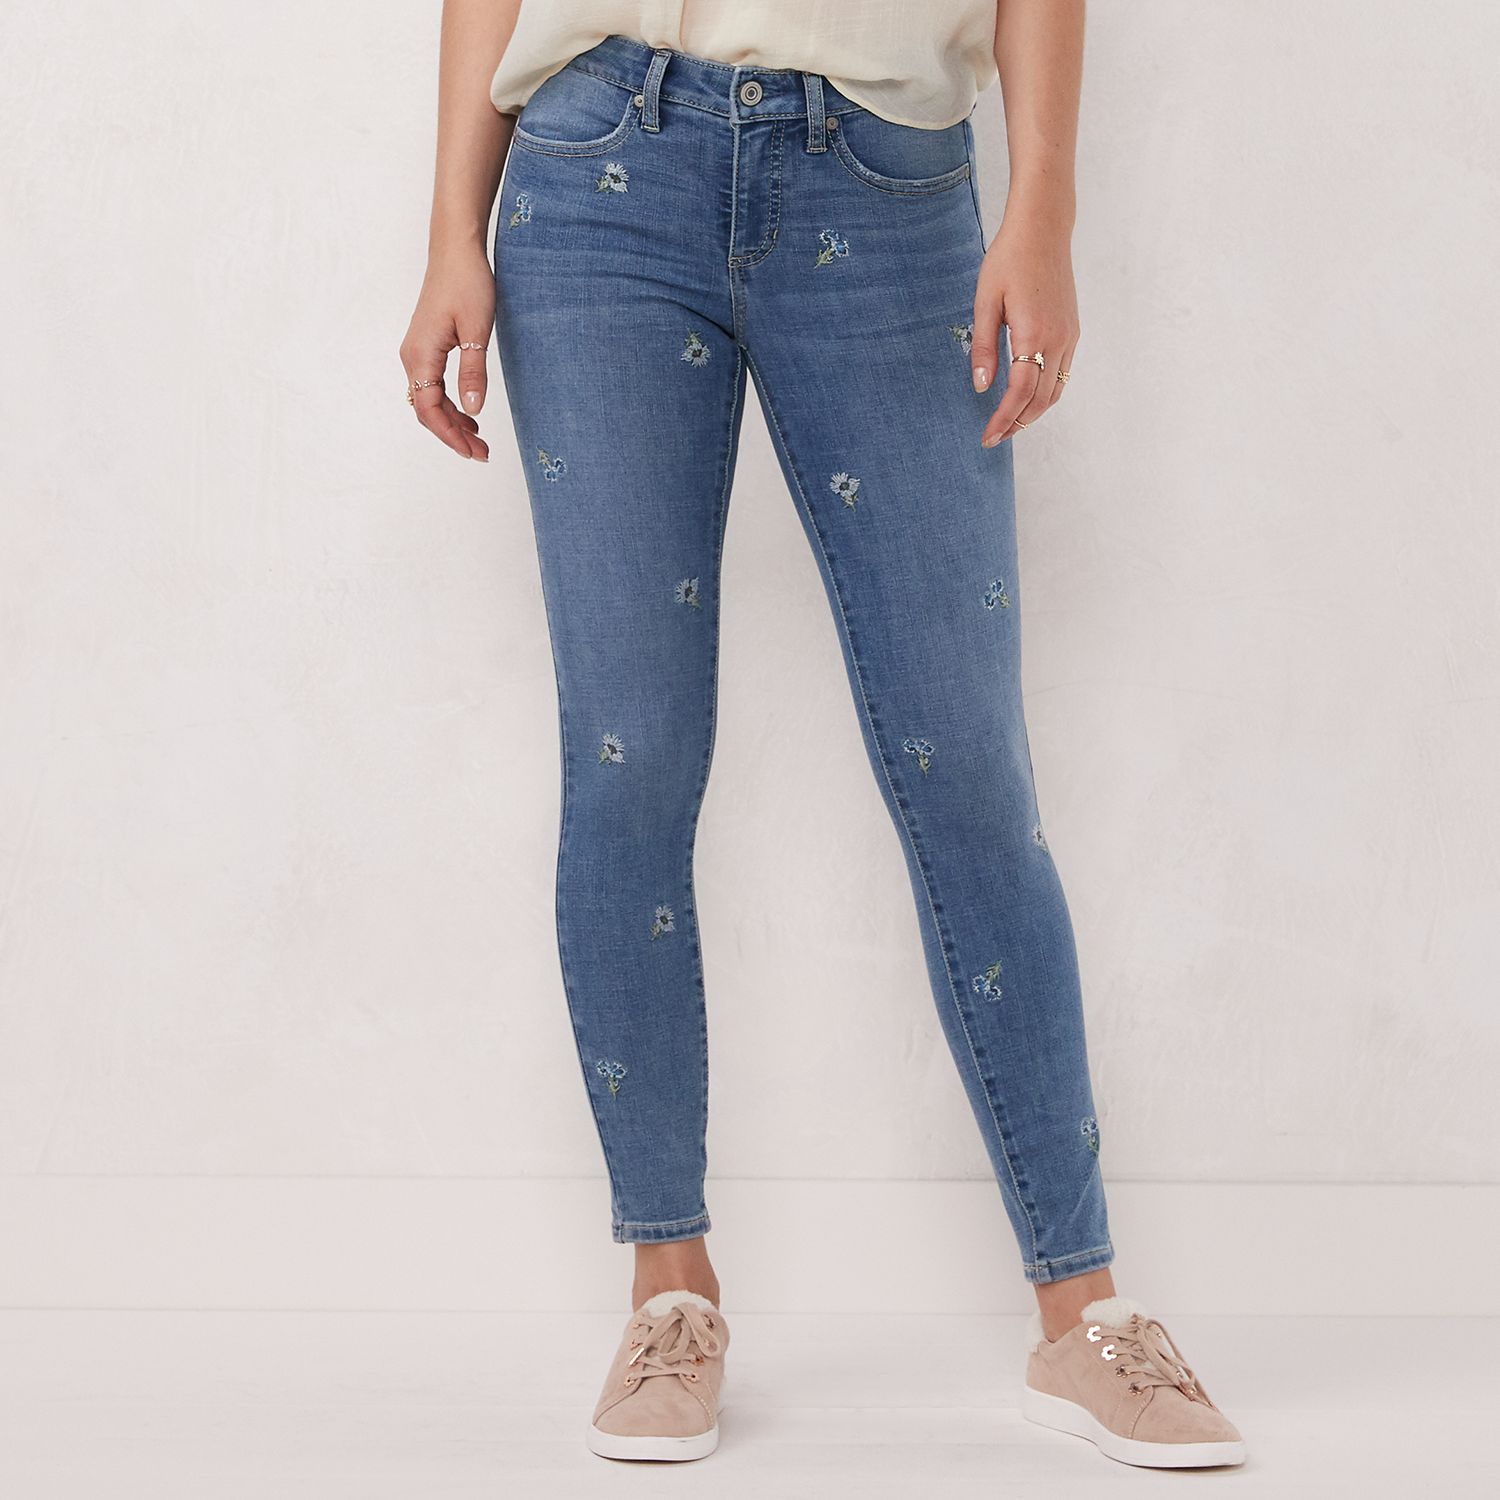 lauren conrad jeans